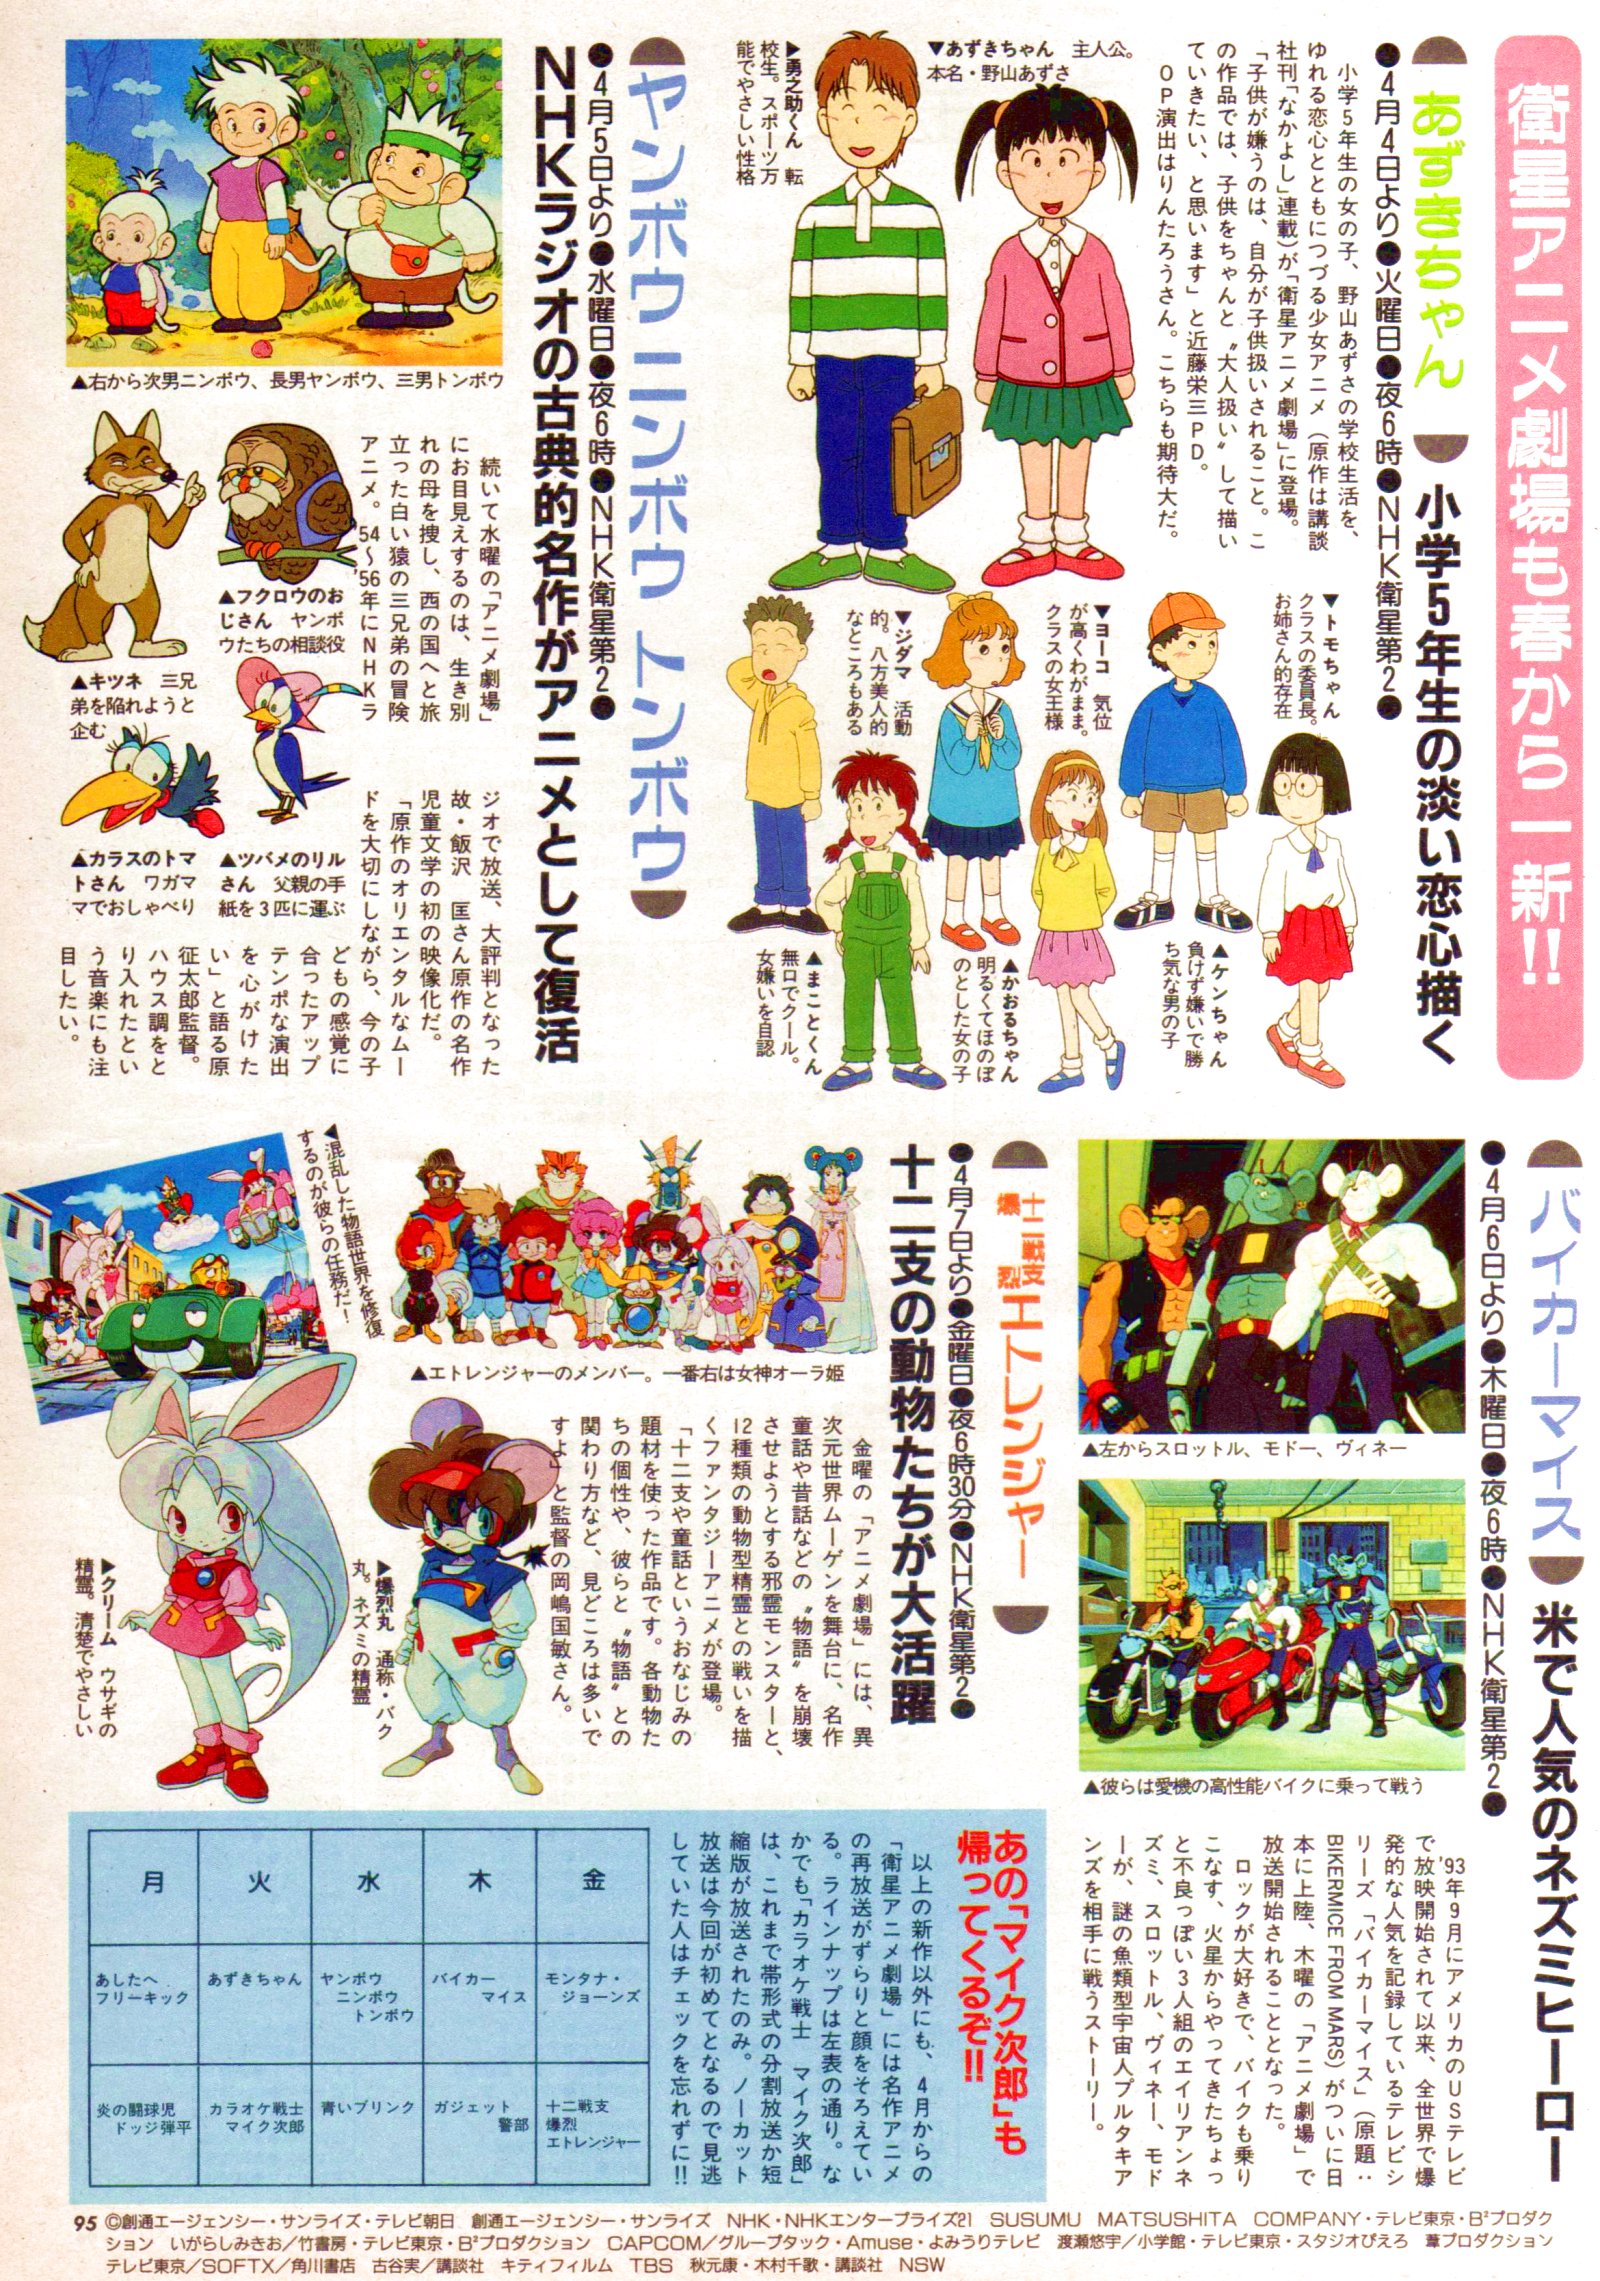 Animarchive Spring 1995 Anime Animage 04 1995 T Co Nakkkqyj2g T Co Uthr1pqk13 T Co Sp9mz59qdf Twitter